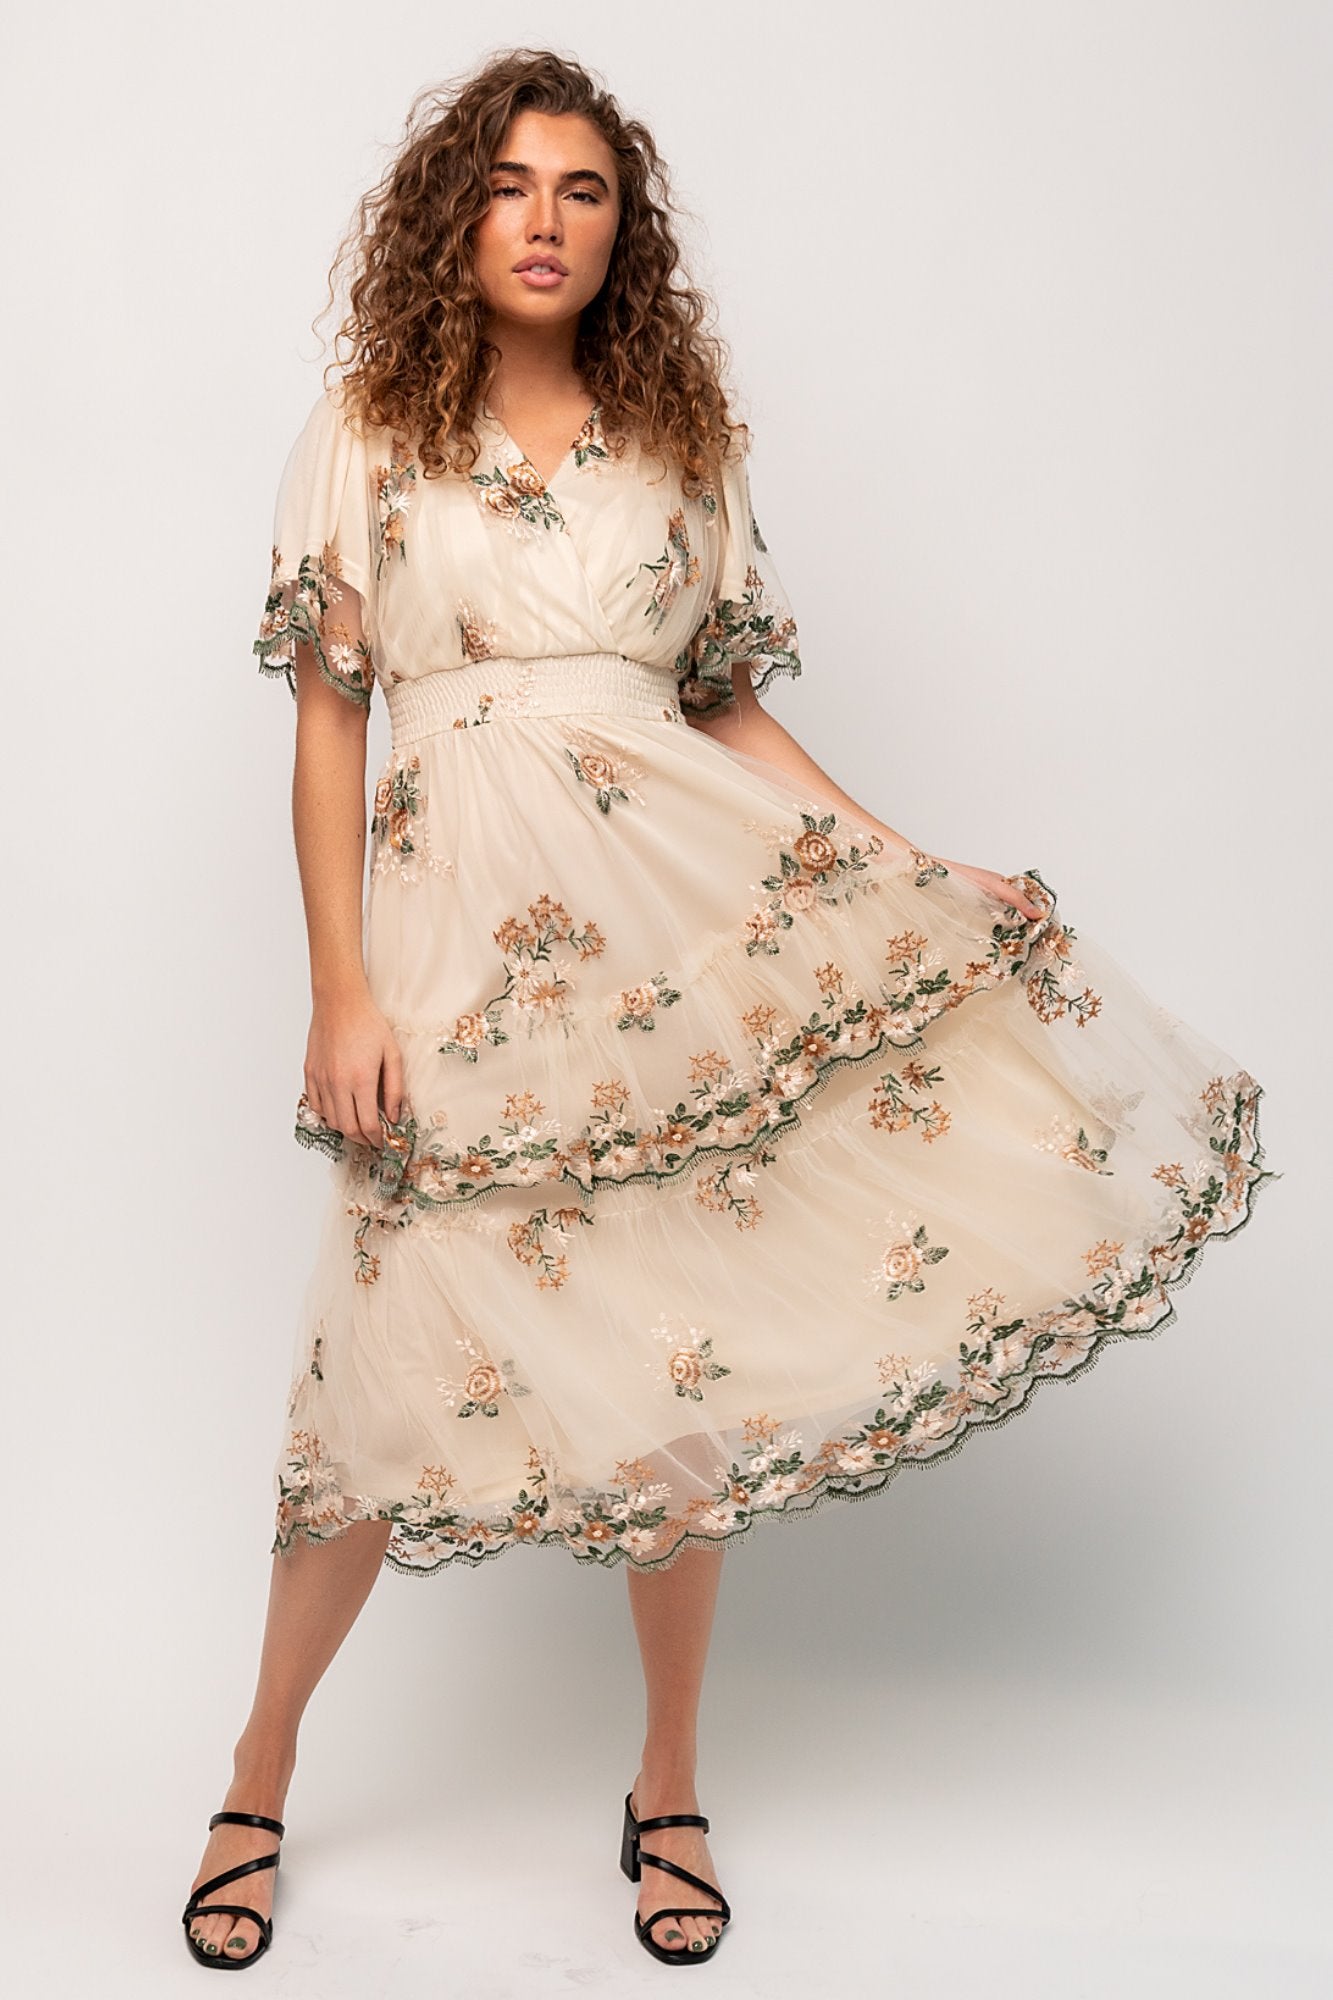 Emmeline Dress Apparel & Accessories Holley Girl 